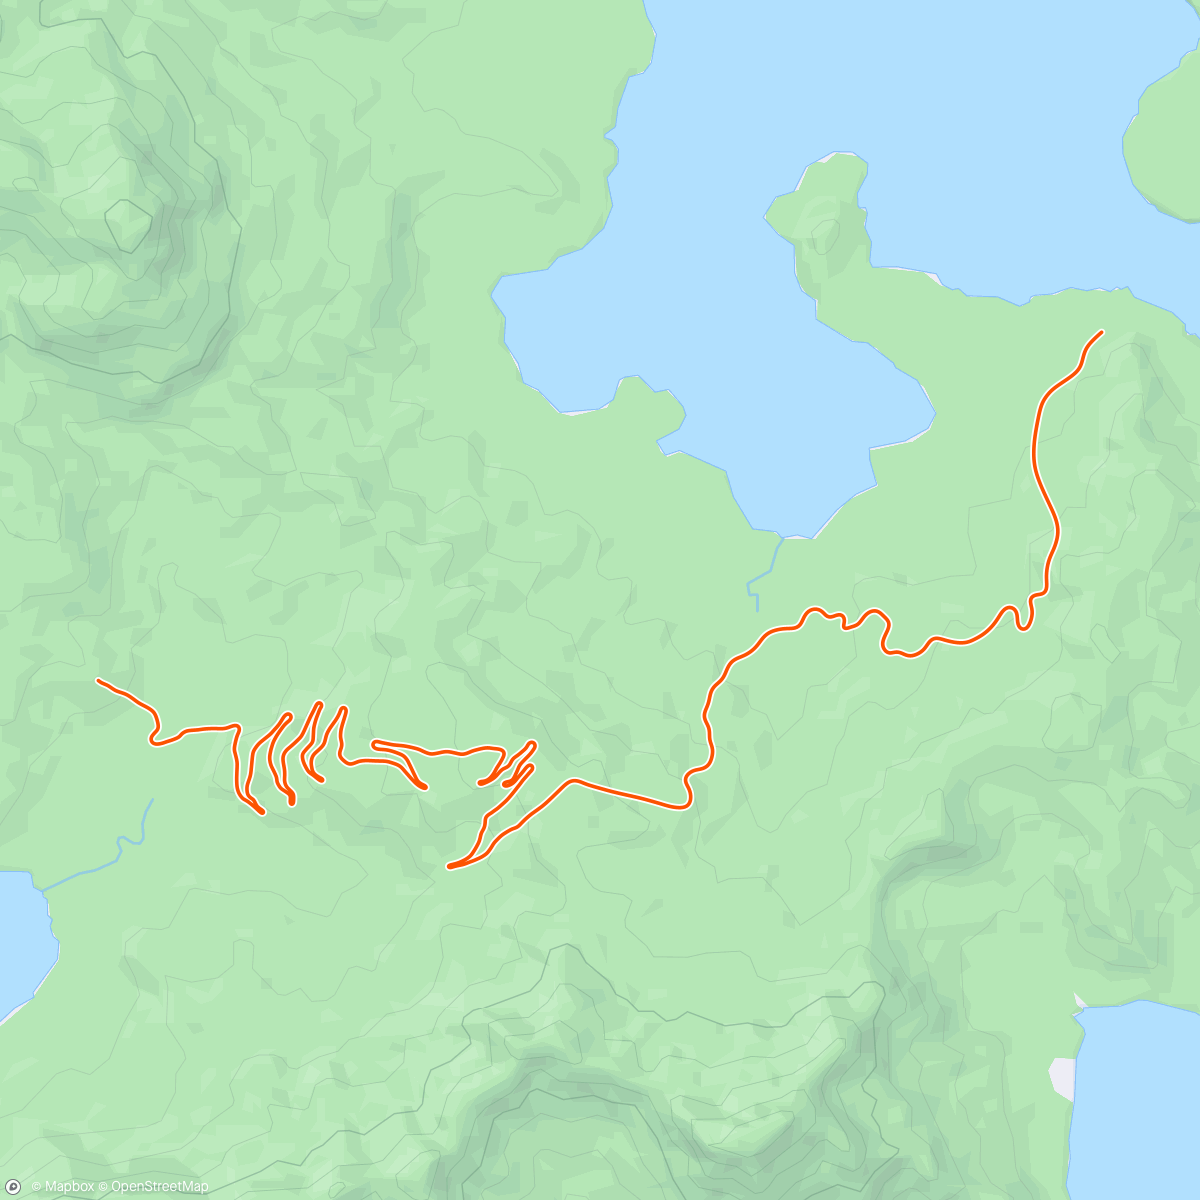 「Road to Sky-Styrketråkk」活動的地圖